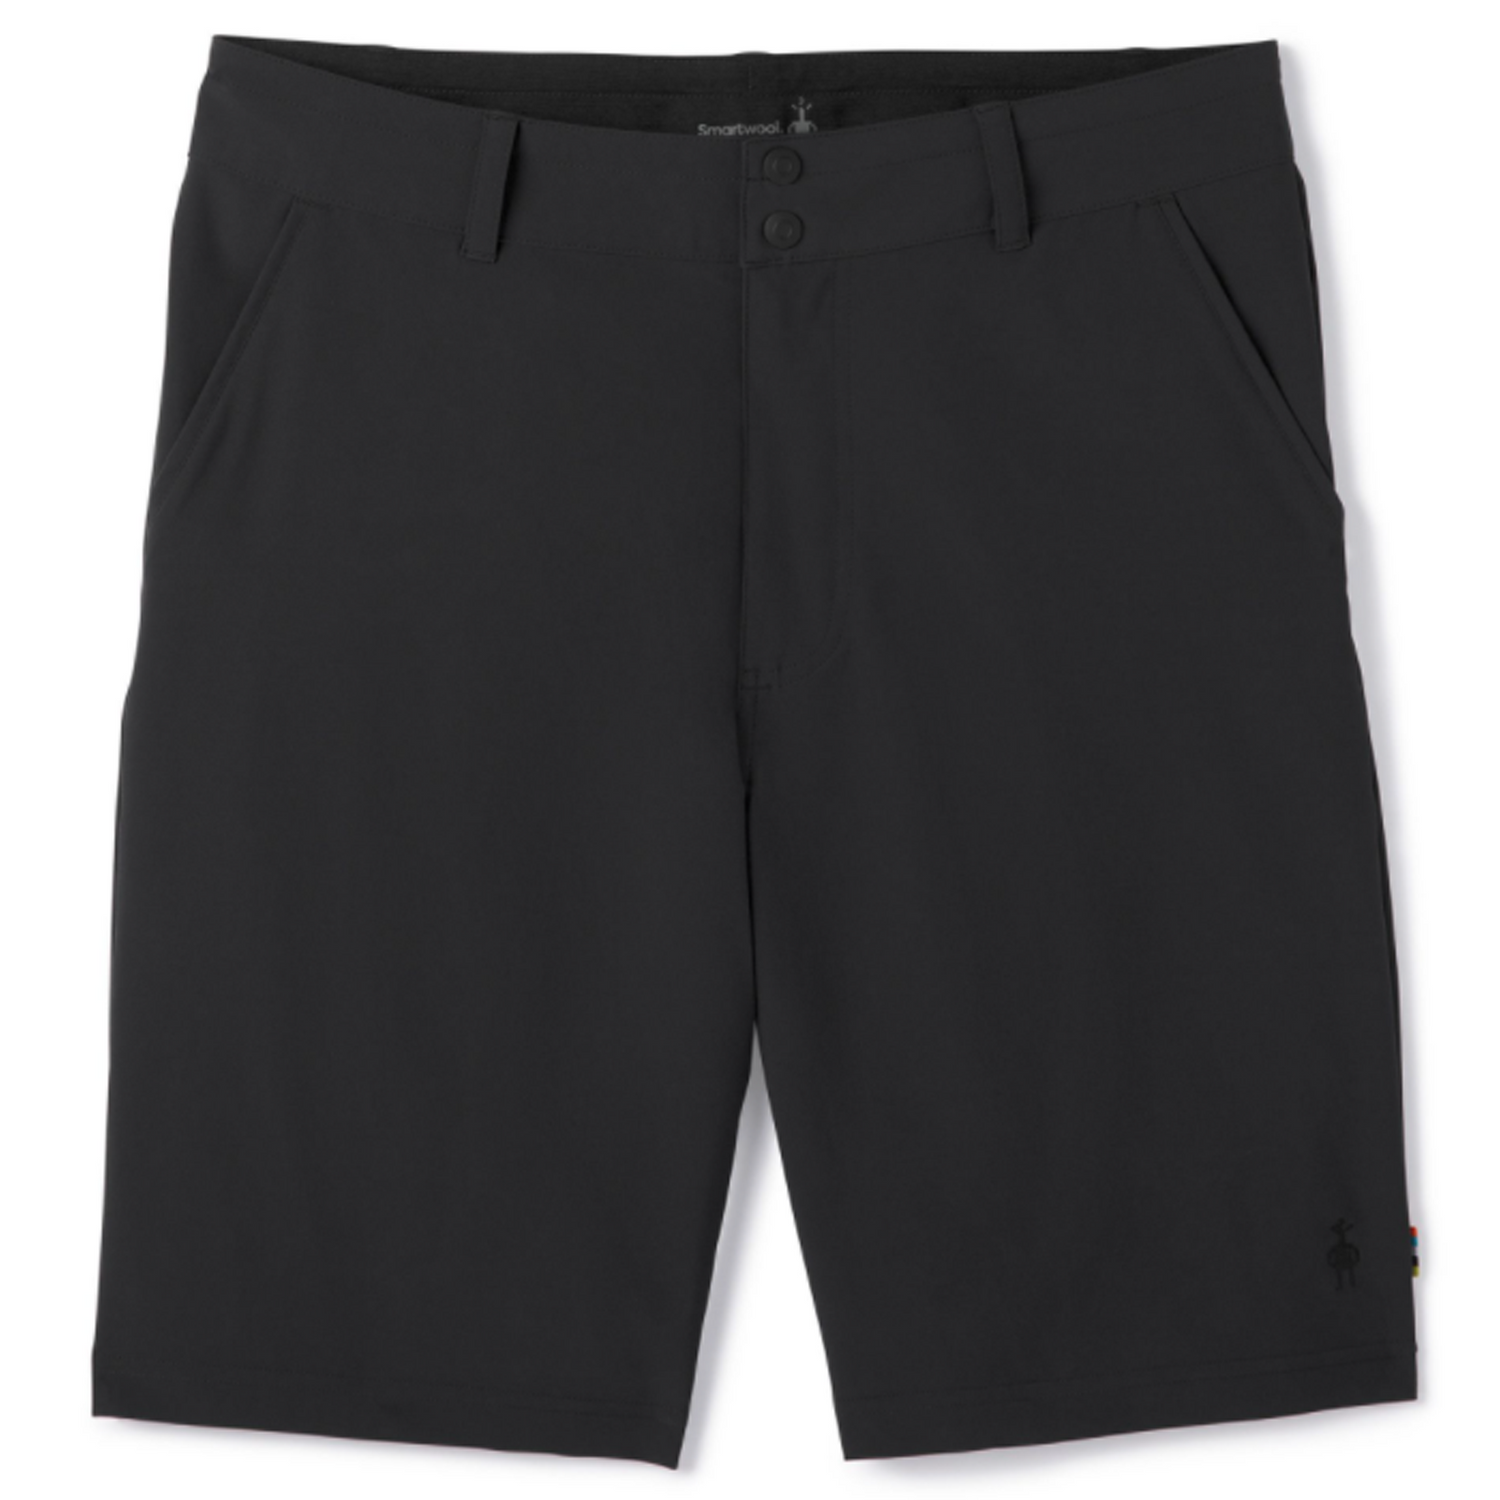 Men's Smartwool Merino Sport Shorts in colour black.